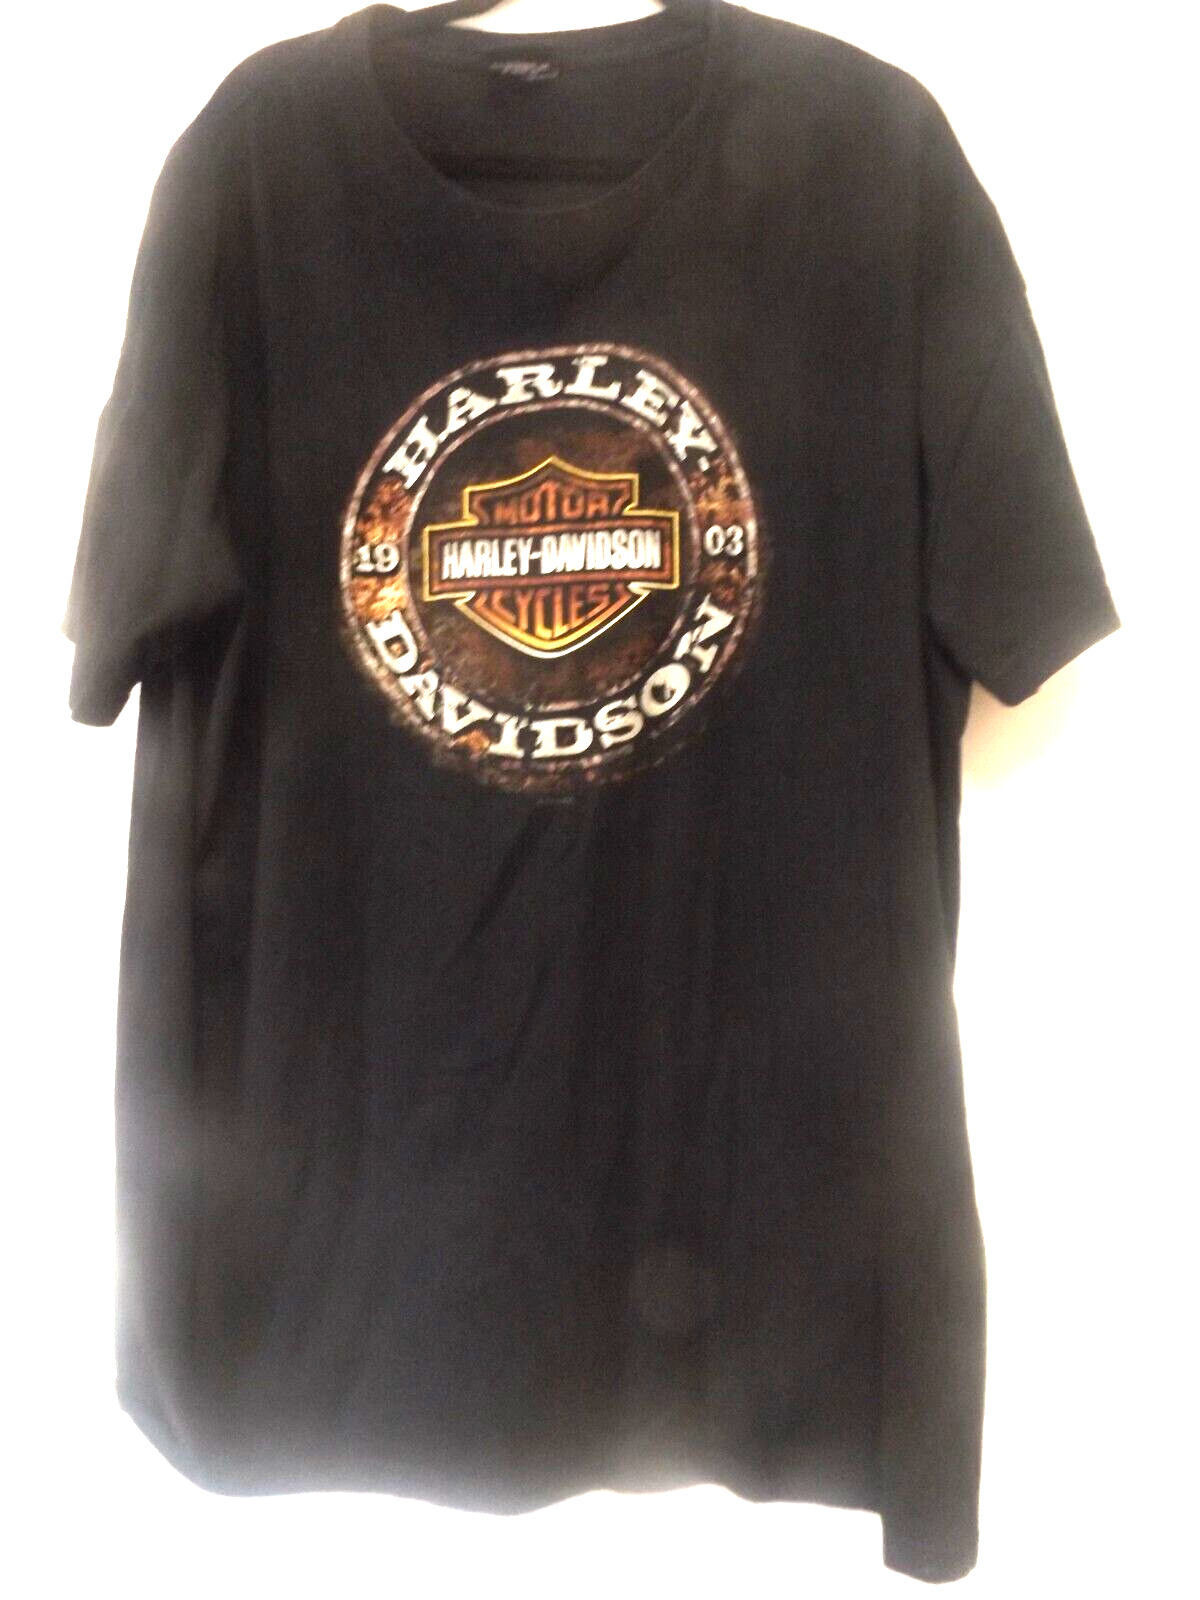 Harley Davidson Vintage T shirt, Finks, Zanesvillee,Ohio 2014